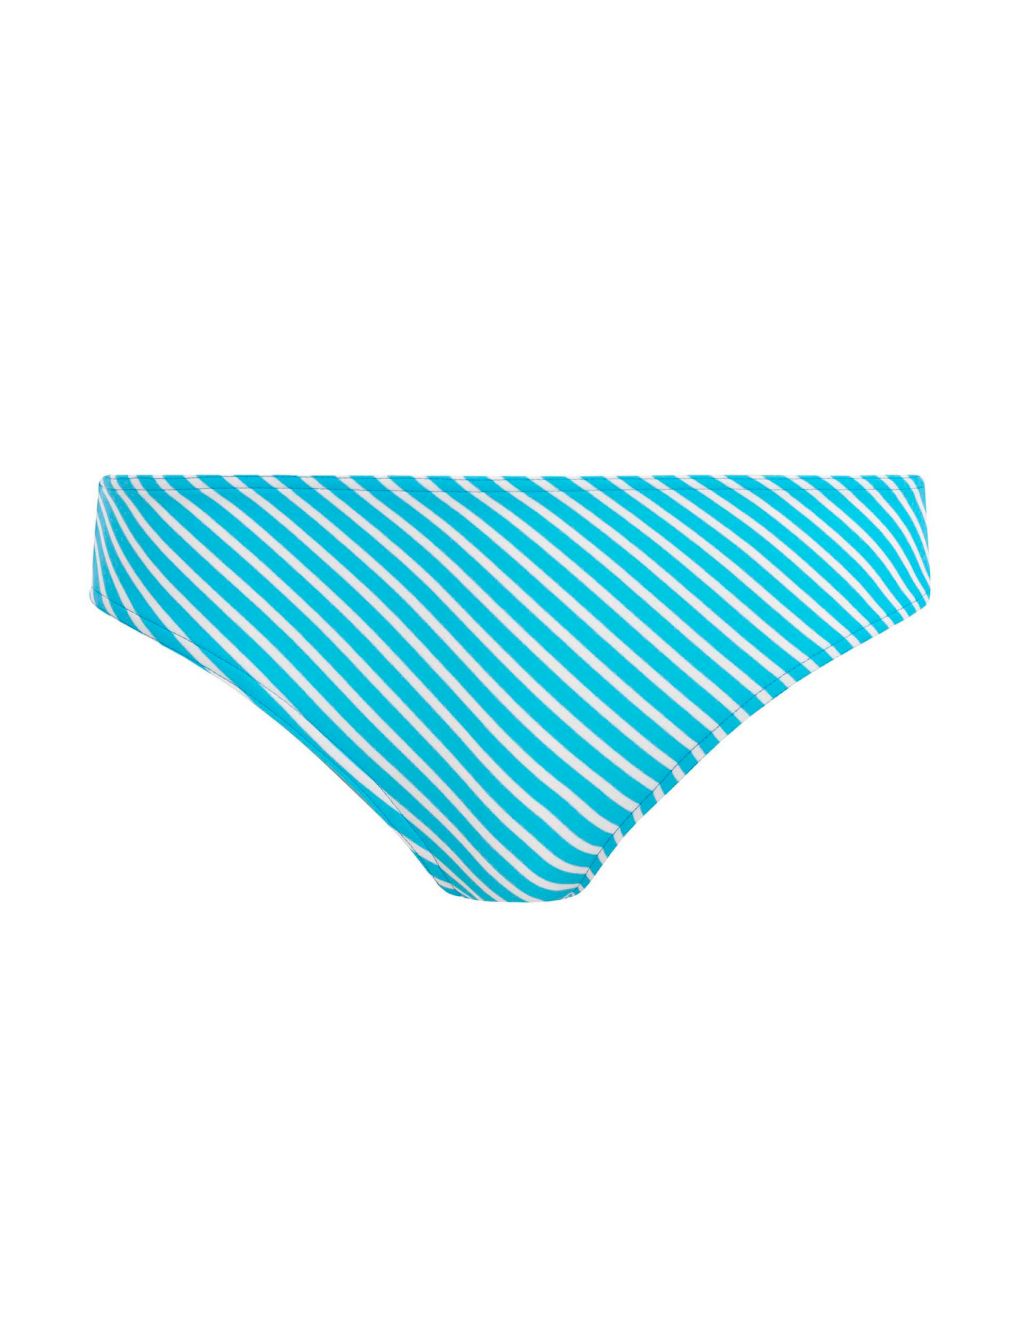 Jewel Cove Striped Bikini Bottoms image 2